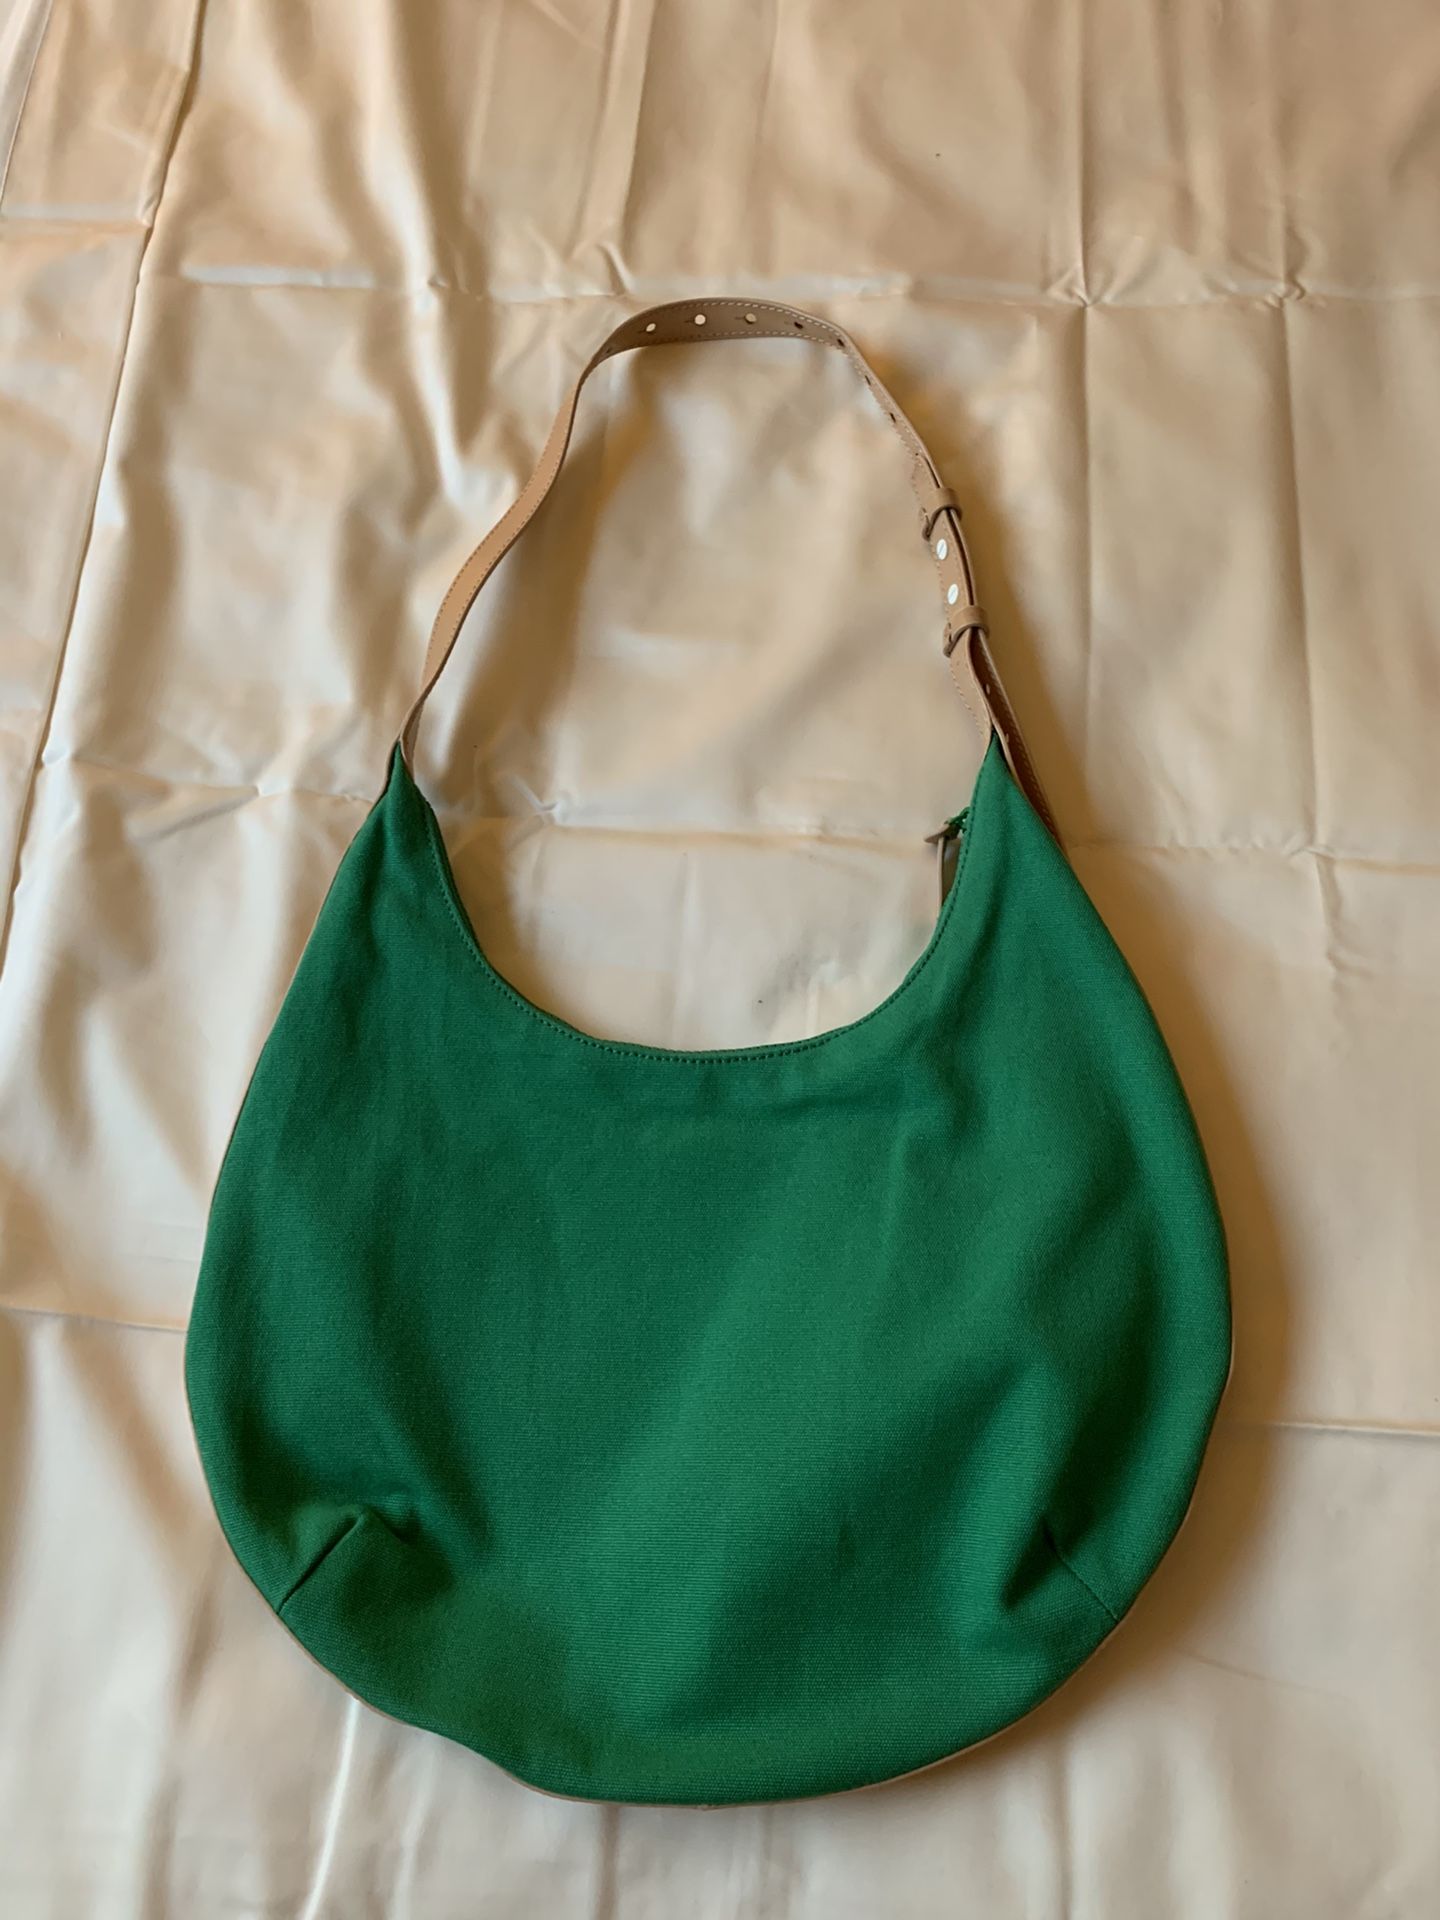 Kate Spade “Saturday” Canvas Handbag, Retail $149, selling for $19 (see other handbag listings)